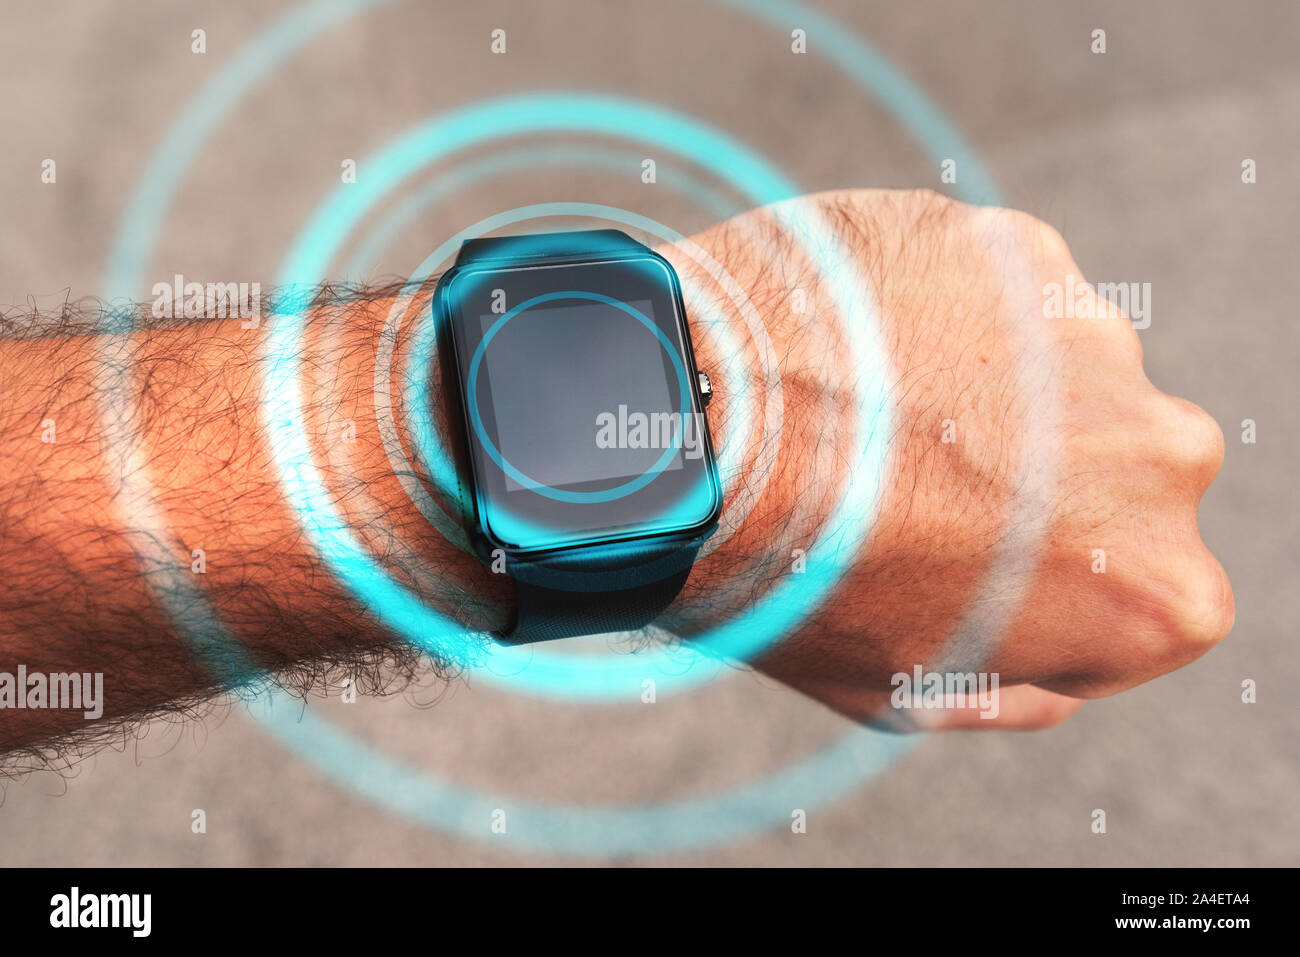 Smart watch on male hand, mock up screen. Digitally enhanced image. Stock Photo